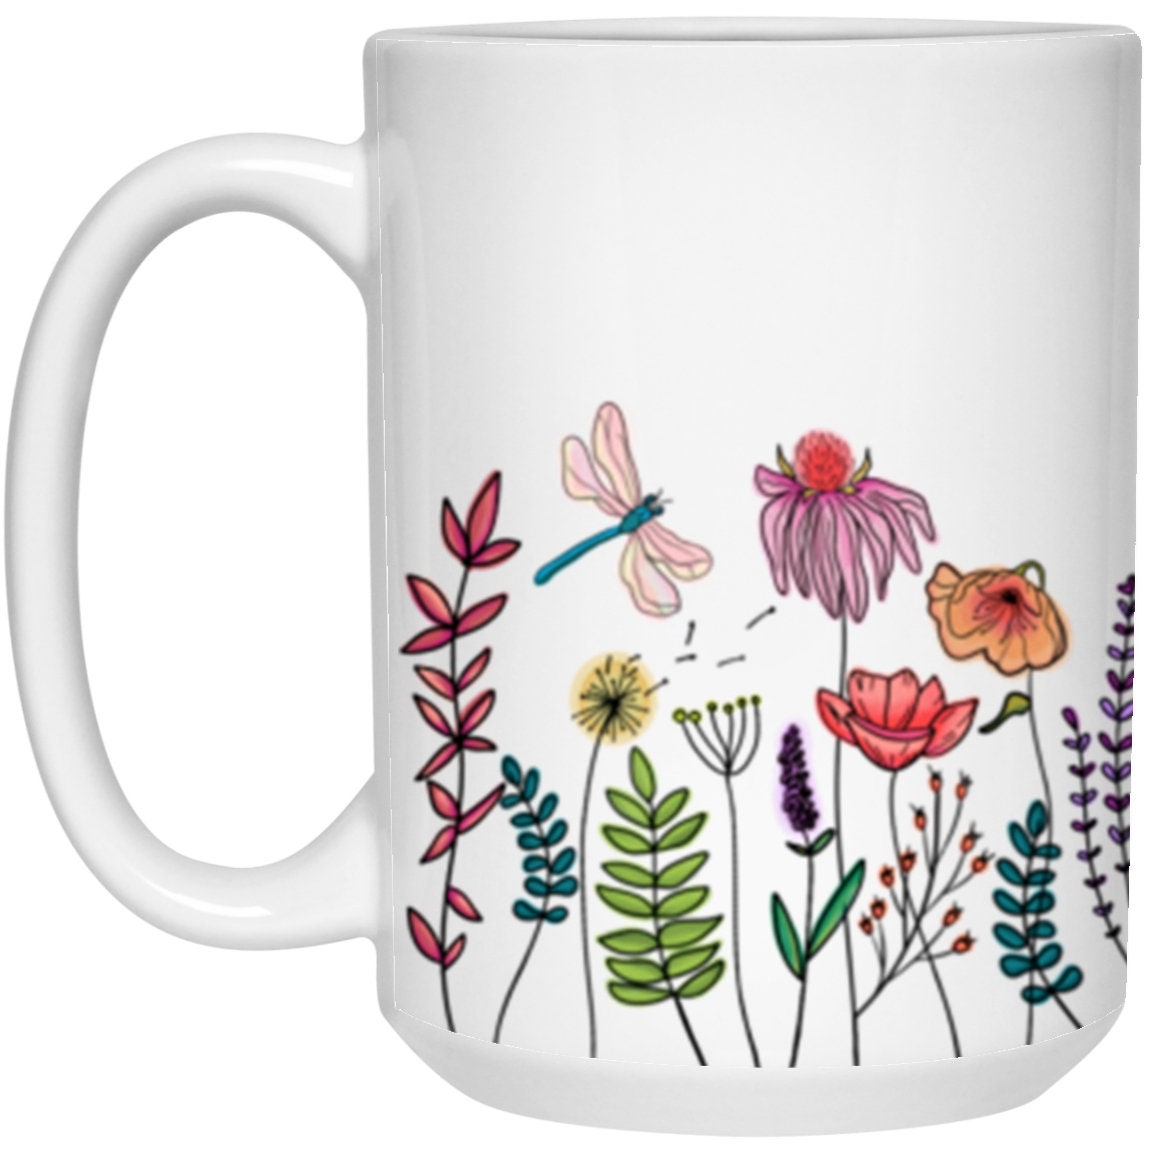 Wildflowers Mug Cute Coffee Cup Plants Lovers